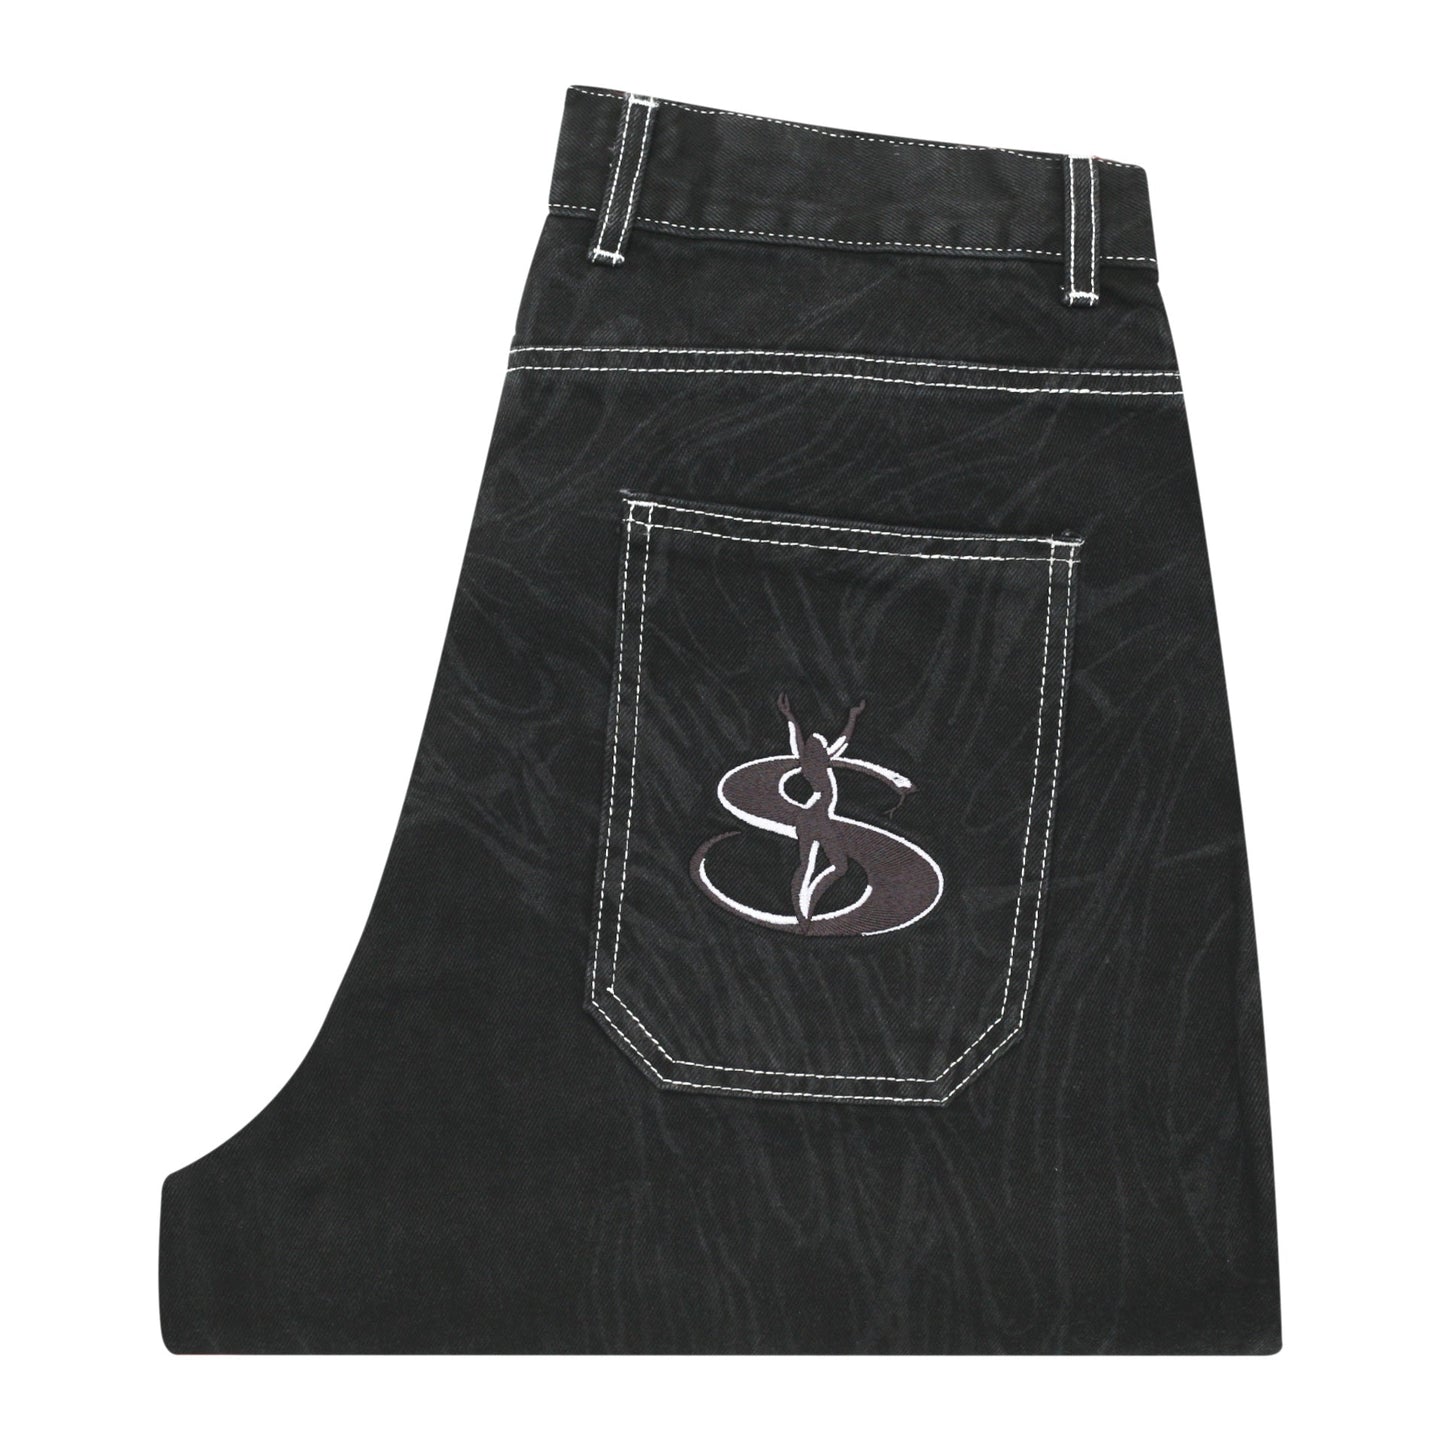 Ripper Jeans (Contrast Black)